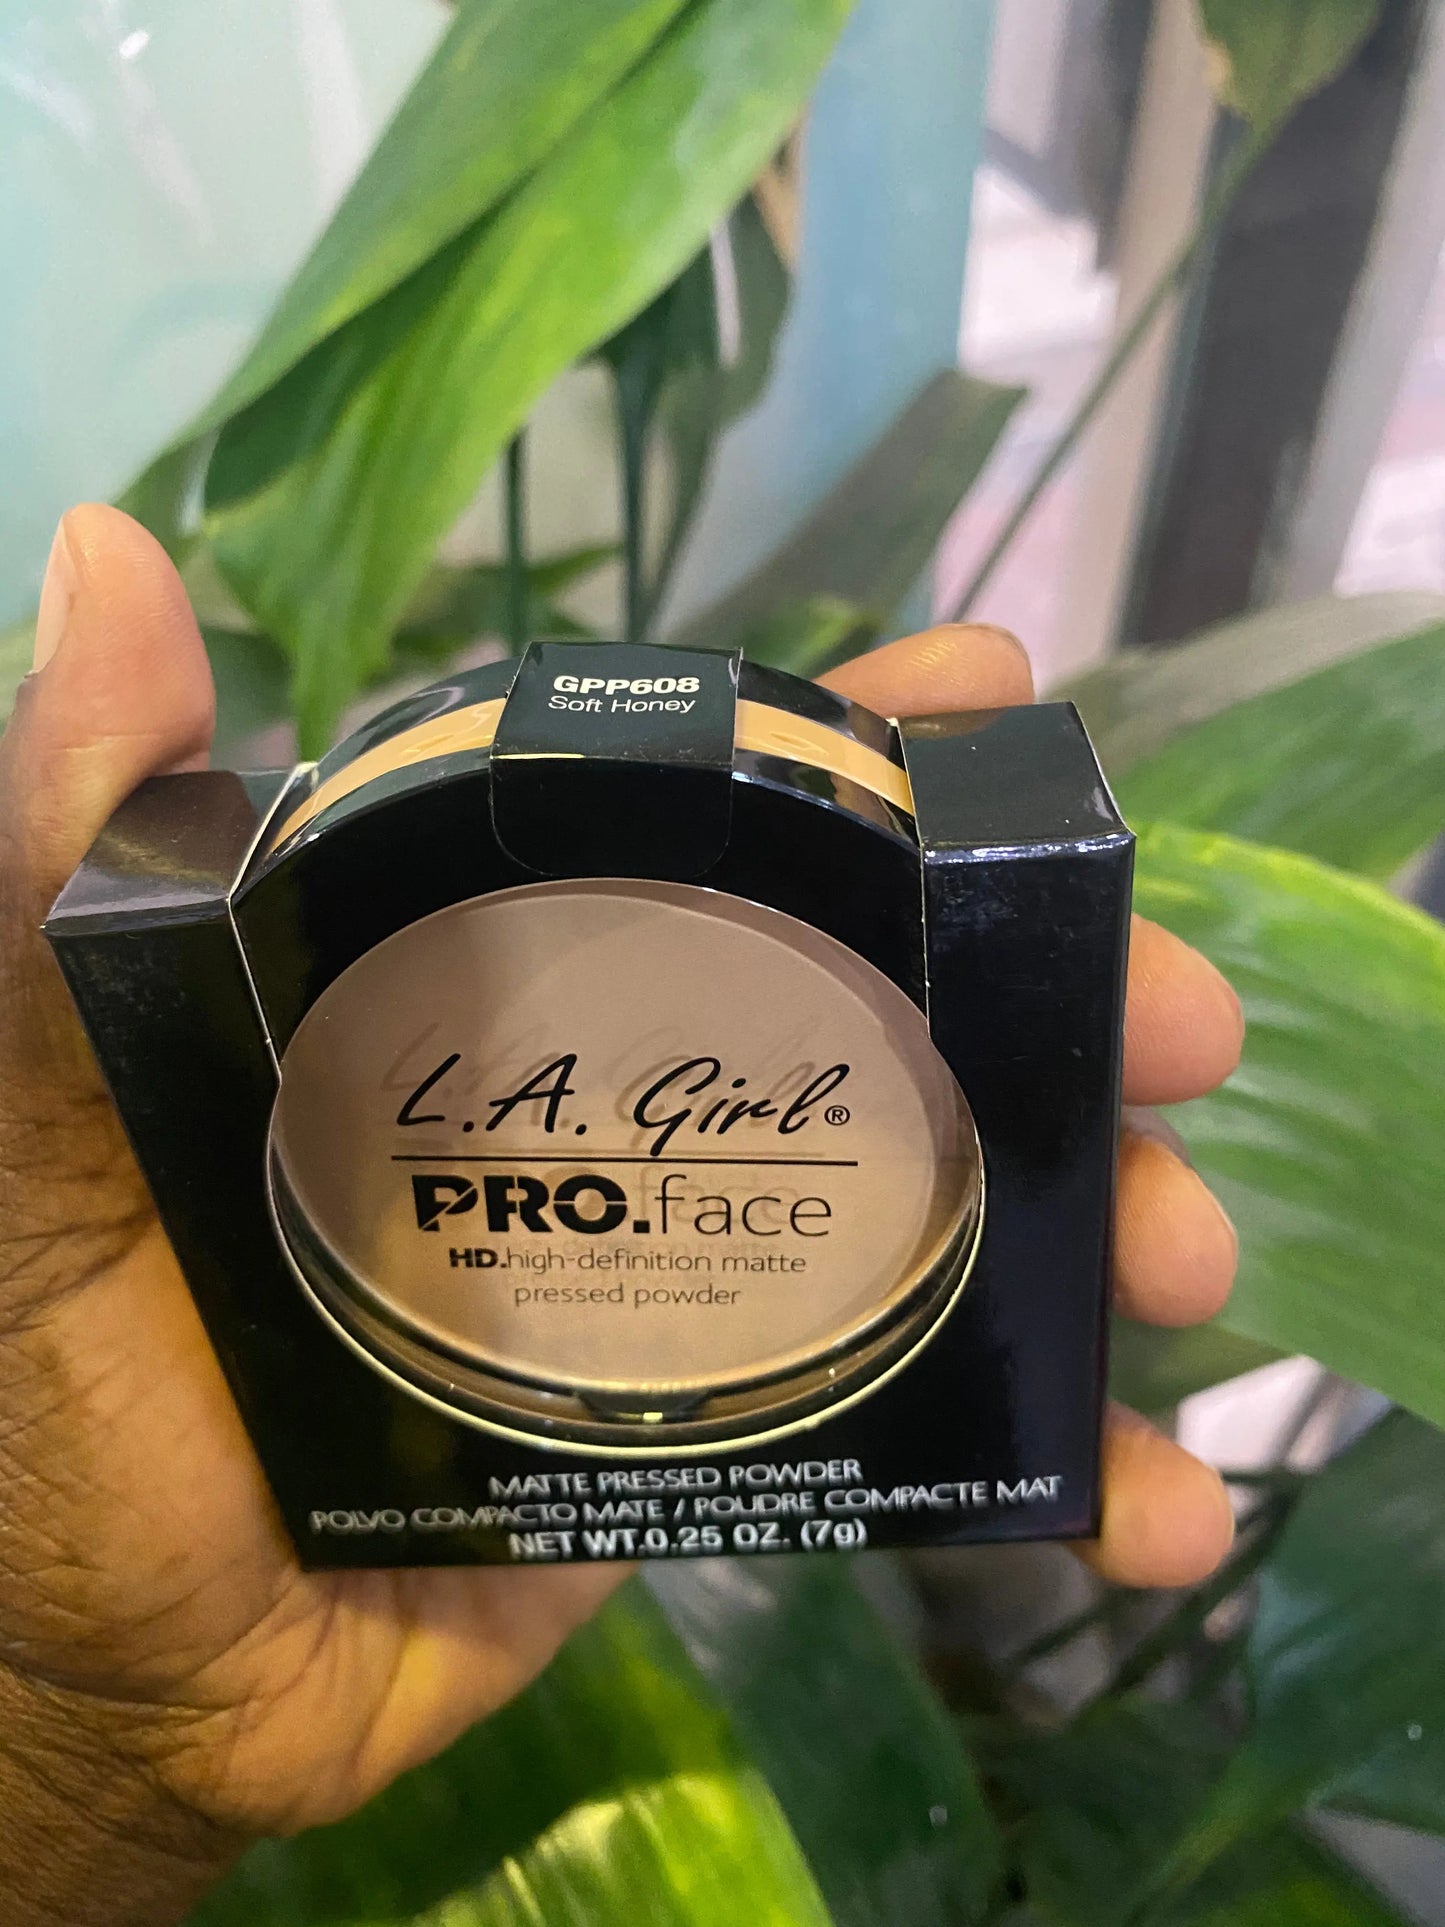 L.A Girl Pro Face HD Matte Pressed Powder La Mimz Beauty & Fashion Store